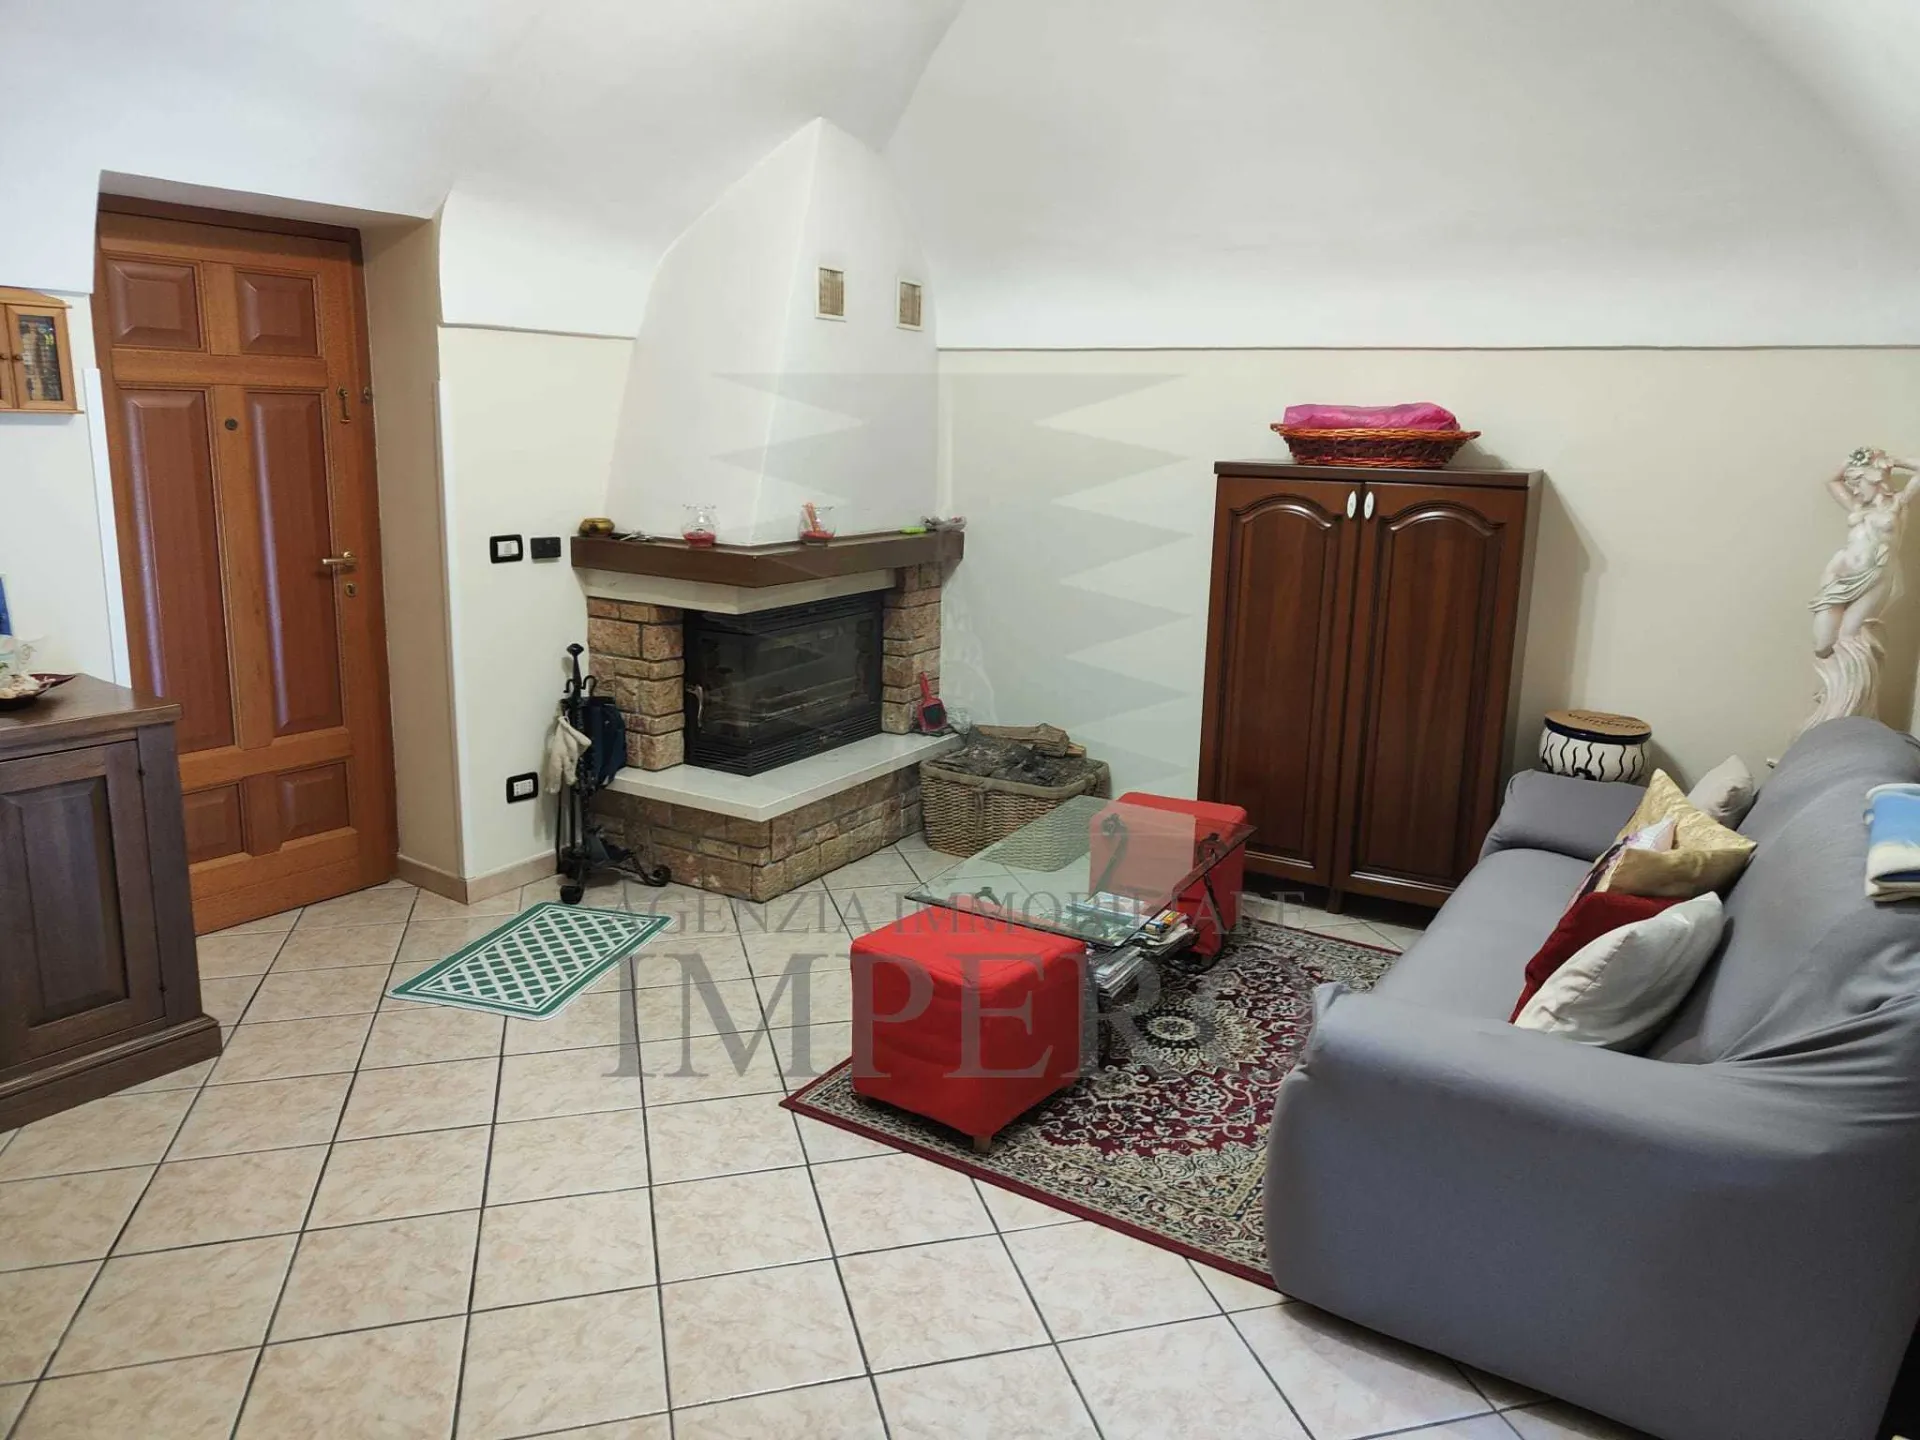 Immagine per Porzione di casa in vendita a Ventimiglia via Murinai 78